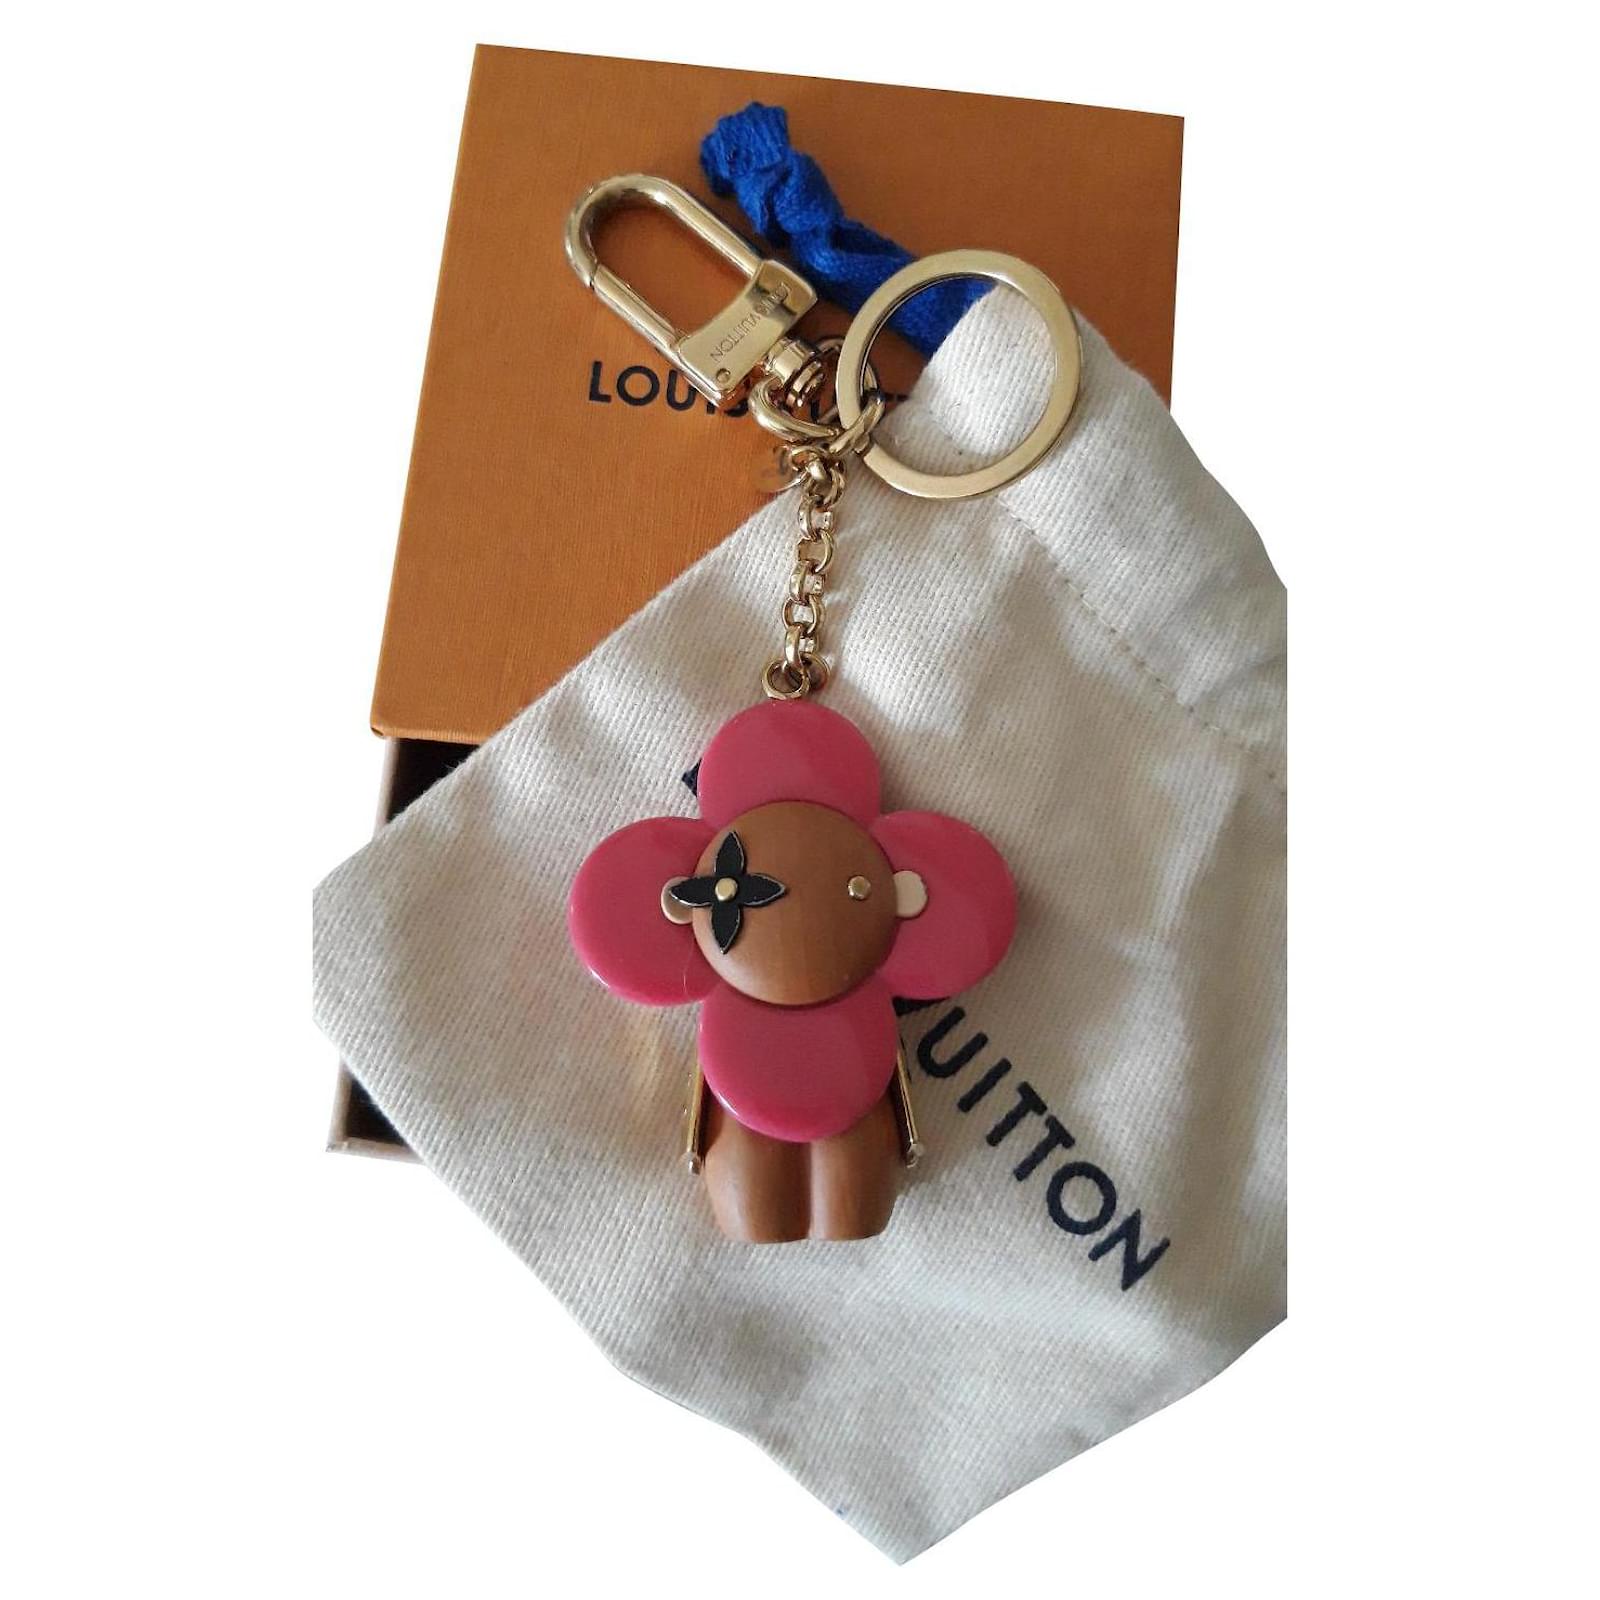 Louis Vuitton Monogram Vivienne Key Holder and Bag Charm